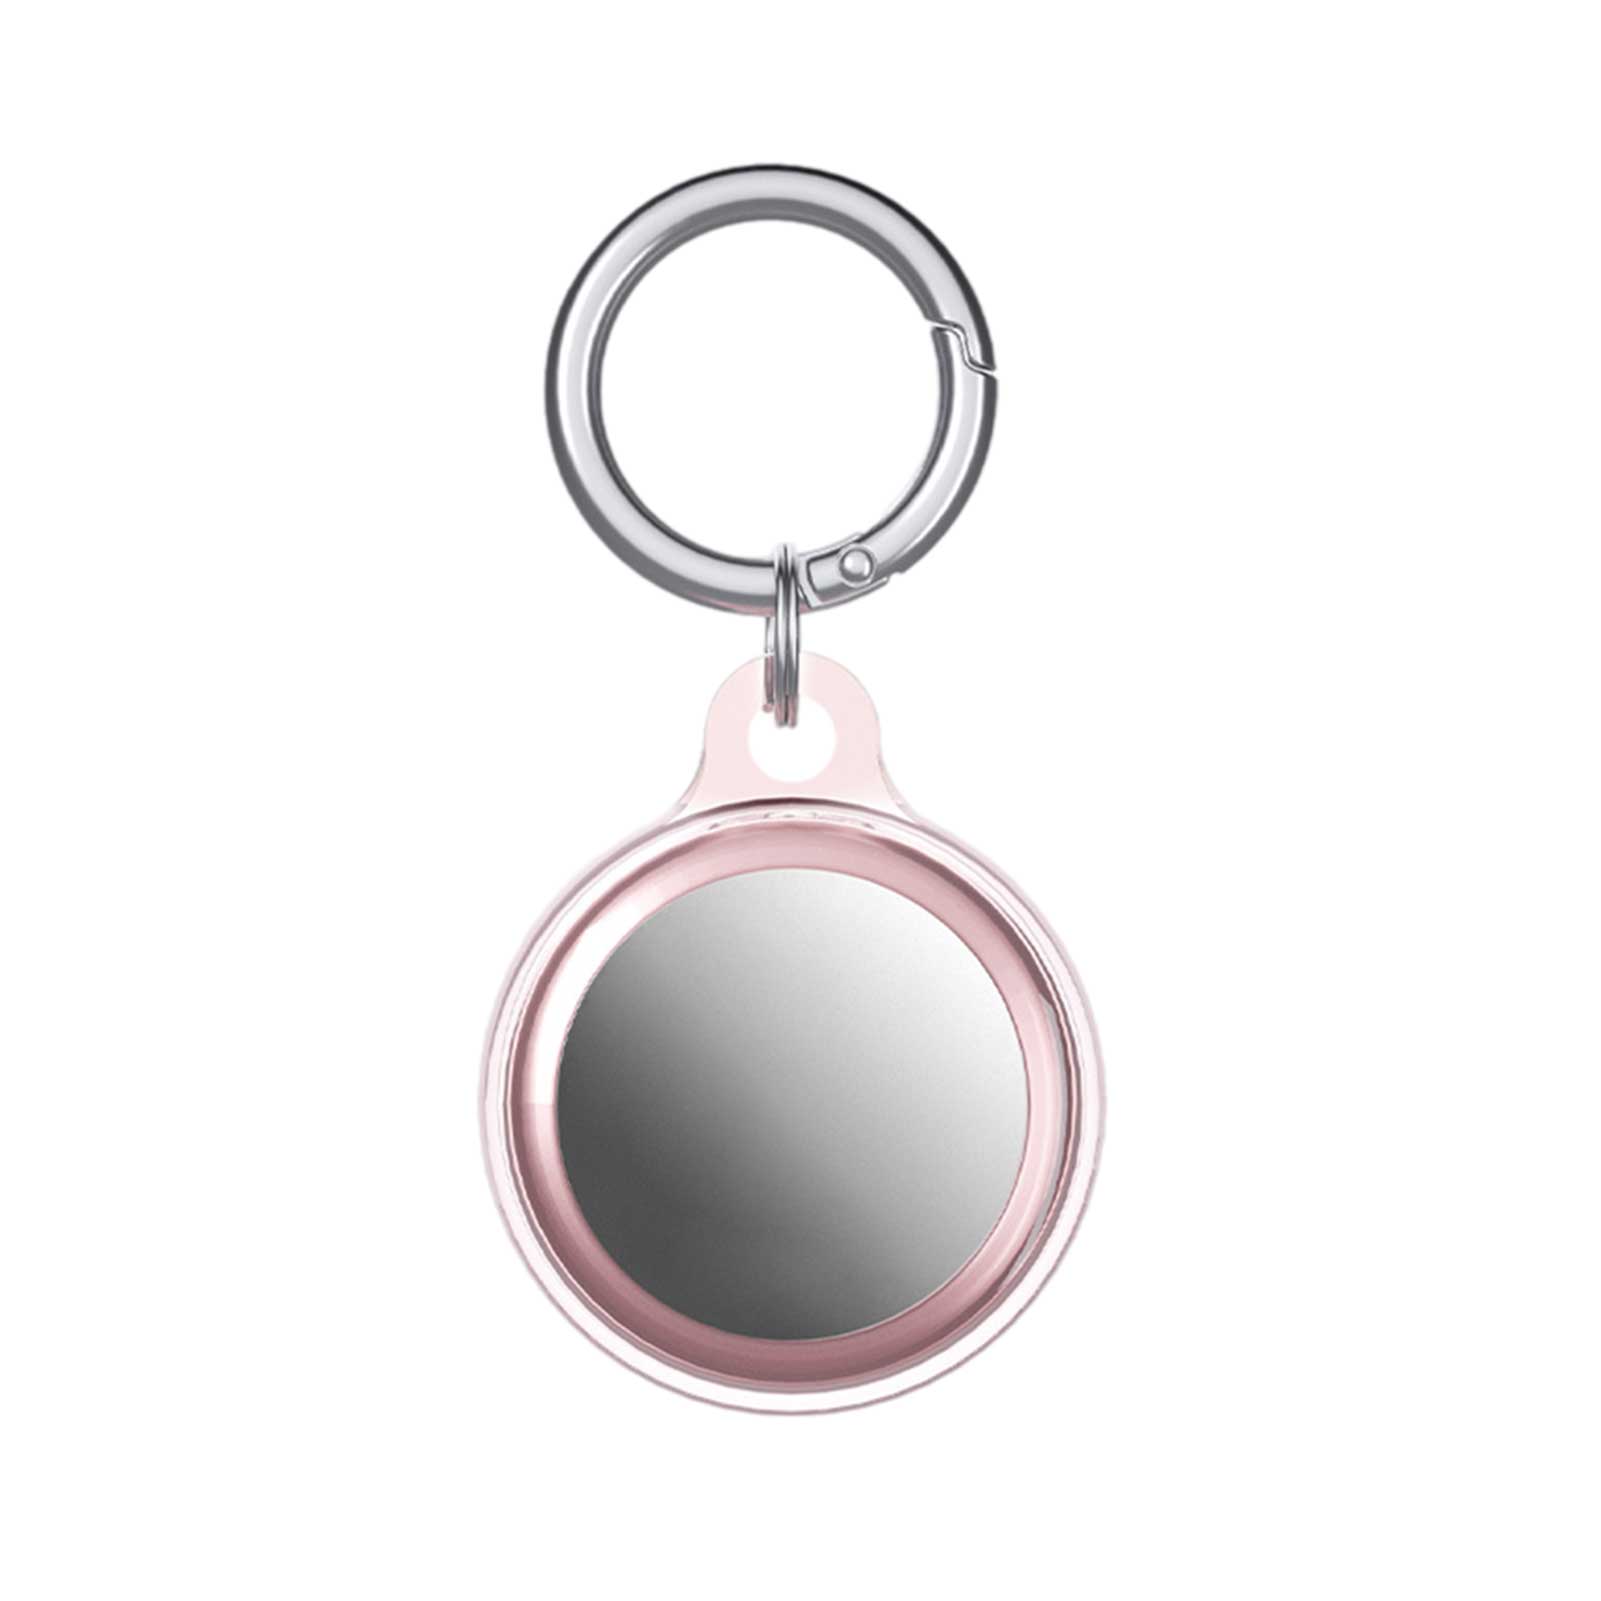 Transparante Tpu Apple Airtags Beschermhoes Voor Apple Airtags Bluetooth Draadloze Tracker Protector Shell Gevallen Accessoires: Pink